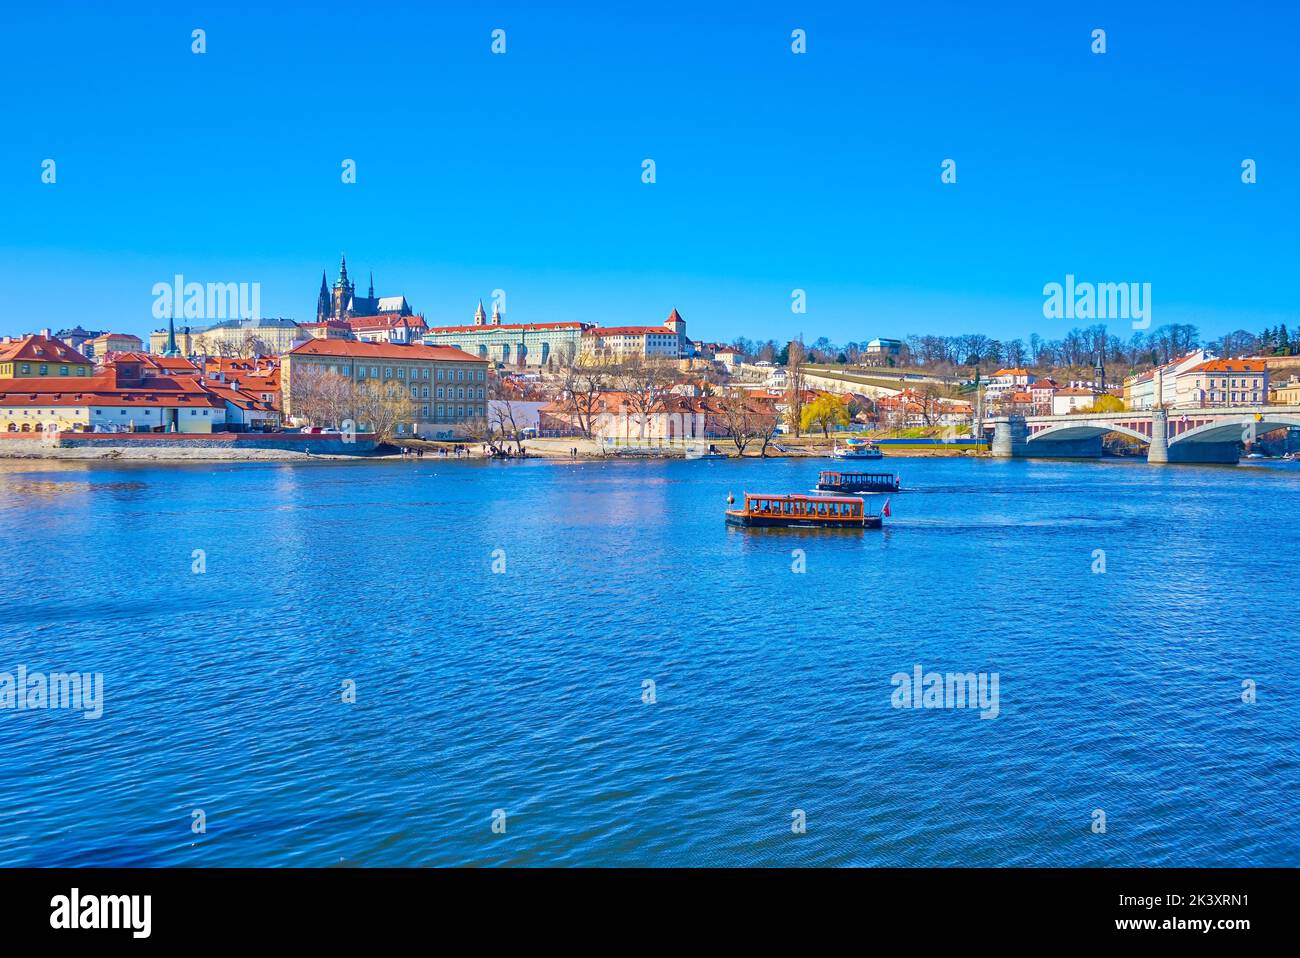 Vltava river with tourist boats and Mala Strana district with its landmarks, Prague, Czech Republic Stock Photo